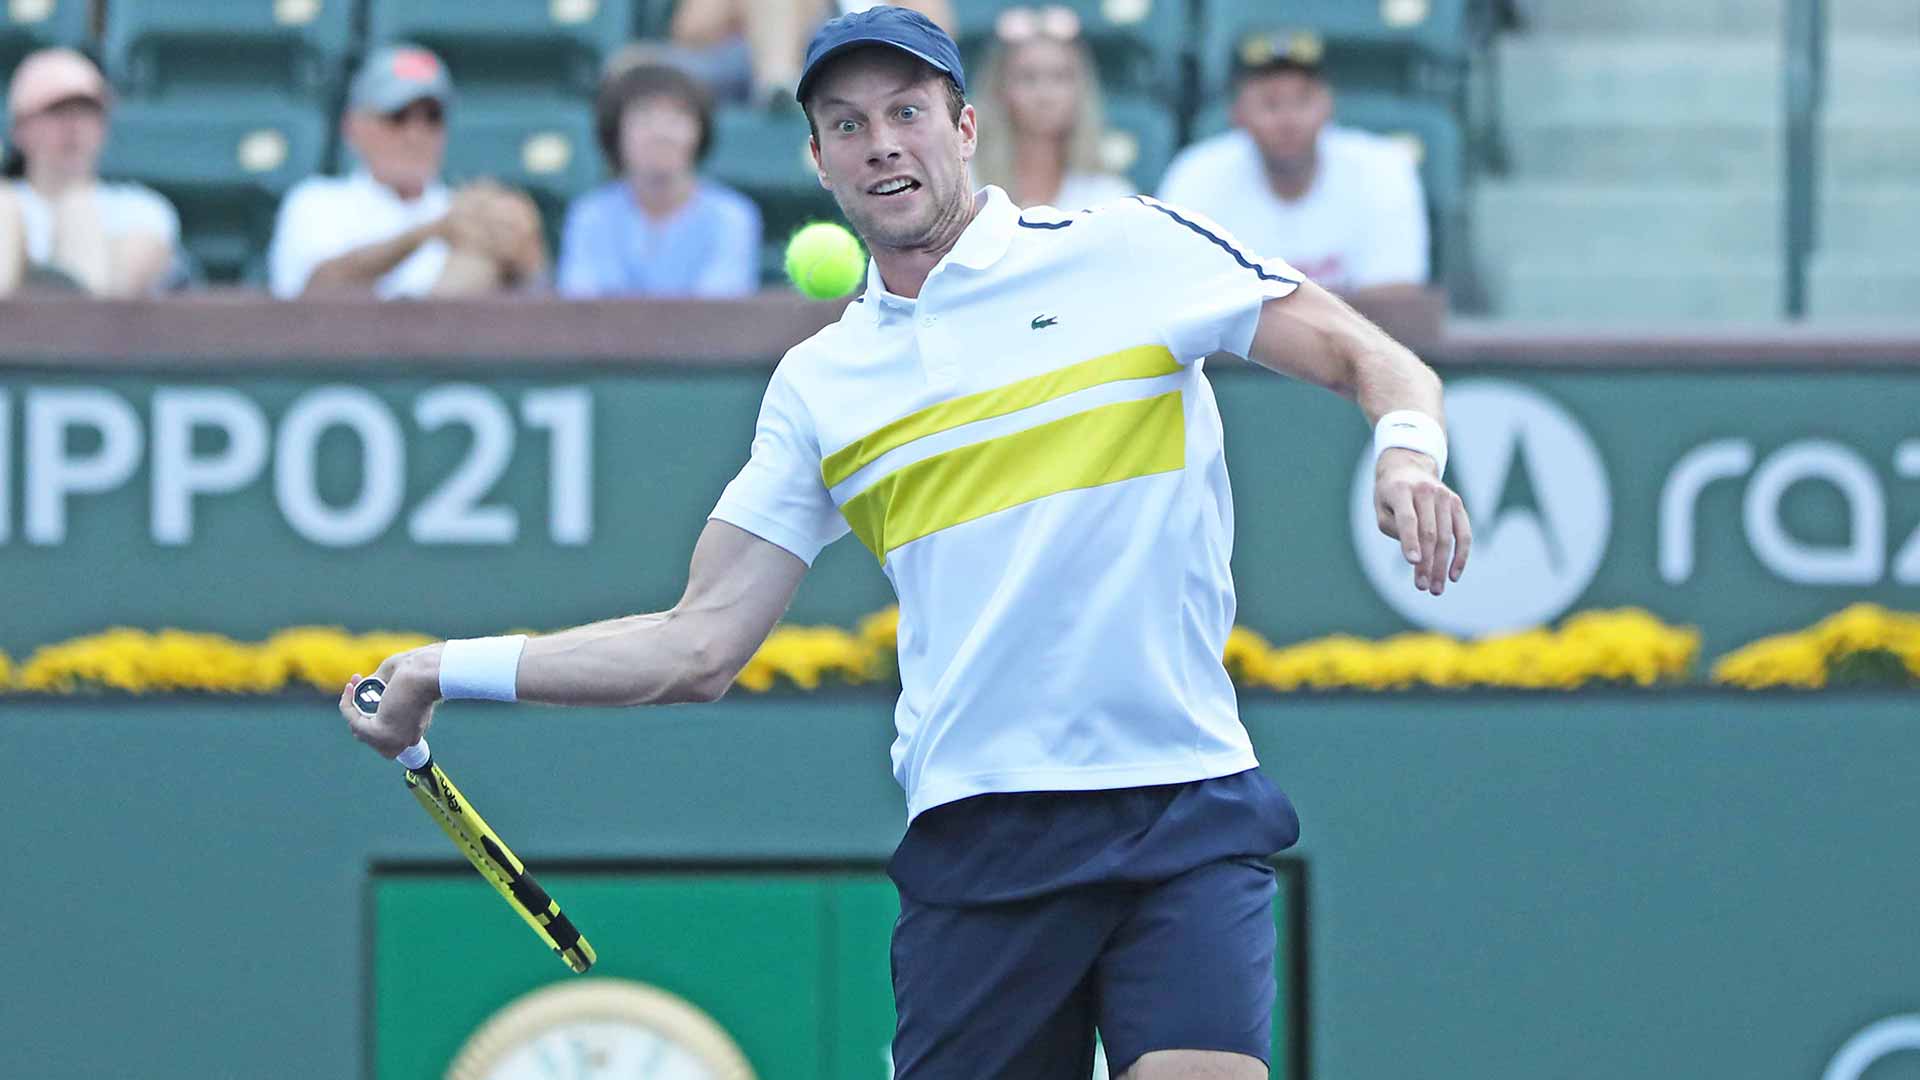 US Open quarter-finalist Botic van de Zandschulp battles through qualifying at the BNP Paribas Open, his first ATP Masters 1000 event.